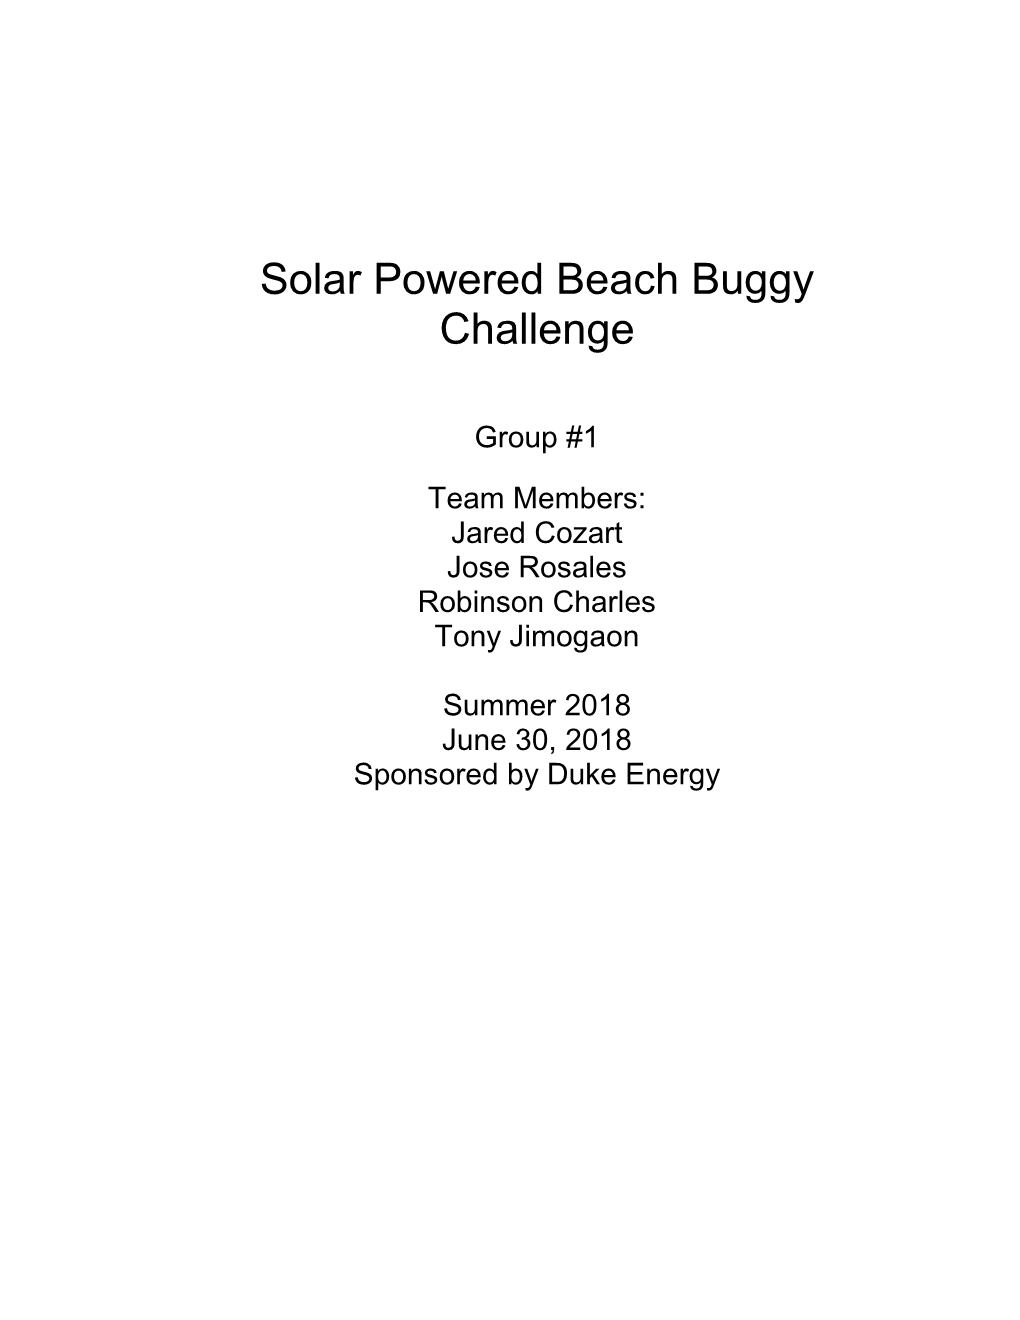 Solar Powered Beach Buggy Challenge